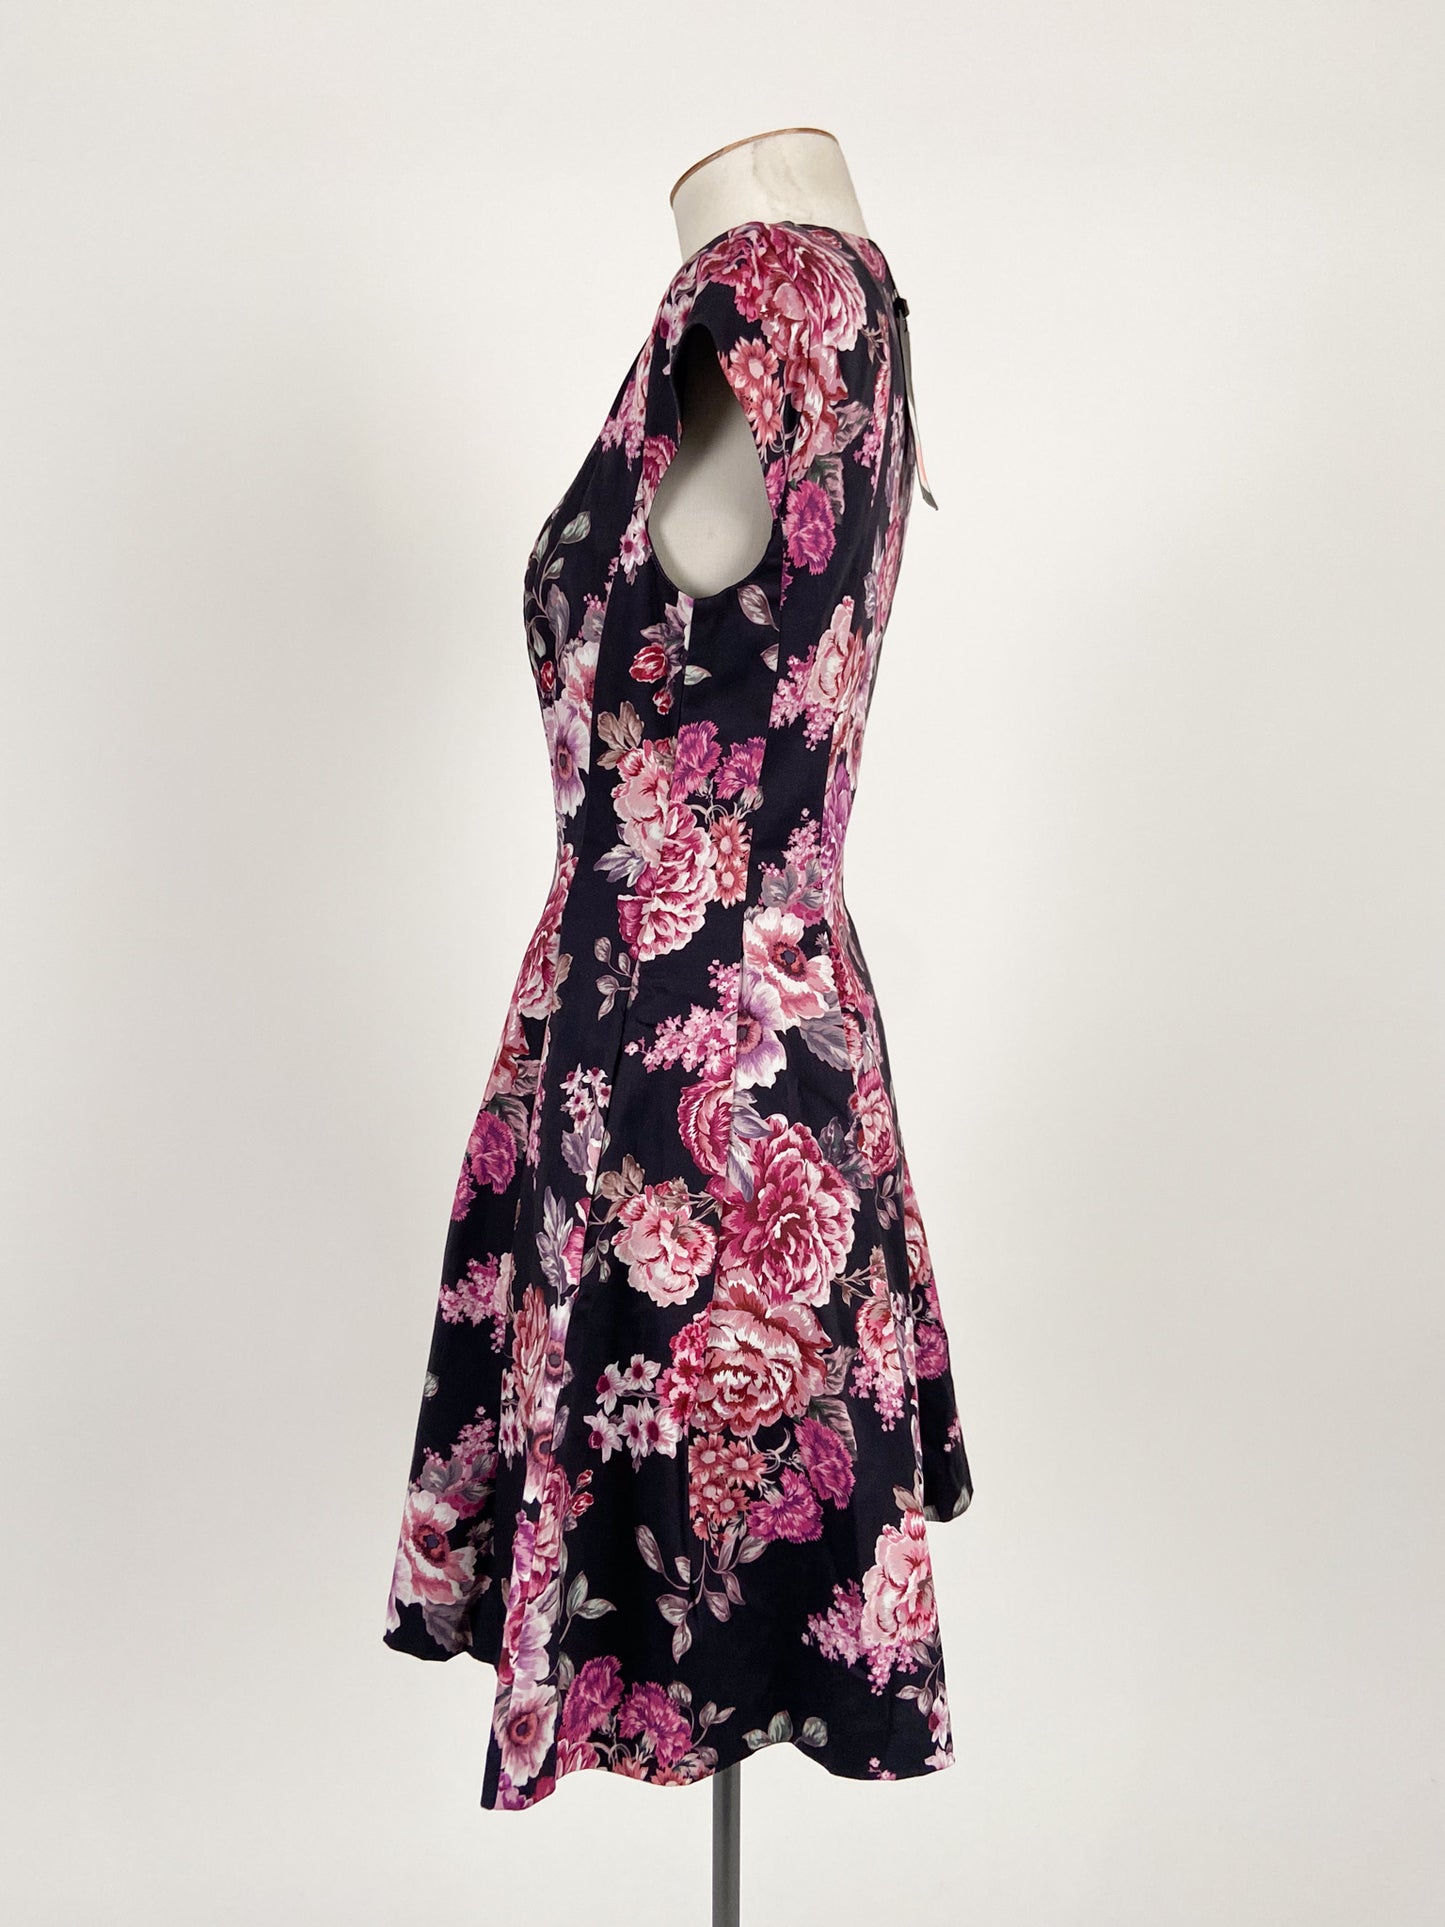 Portmans | Multicoloured Casual/Workwear Dress | Size 8